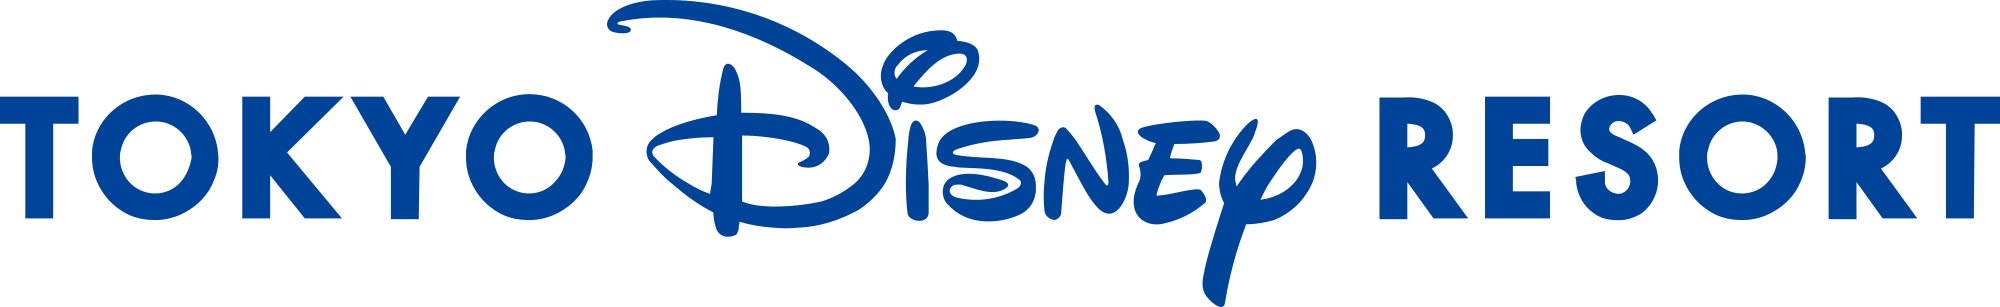 Disney Resort Logo - Tokyo Disney Resort logo.svg